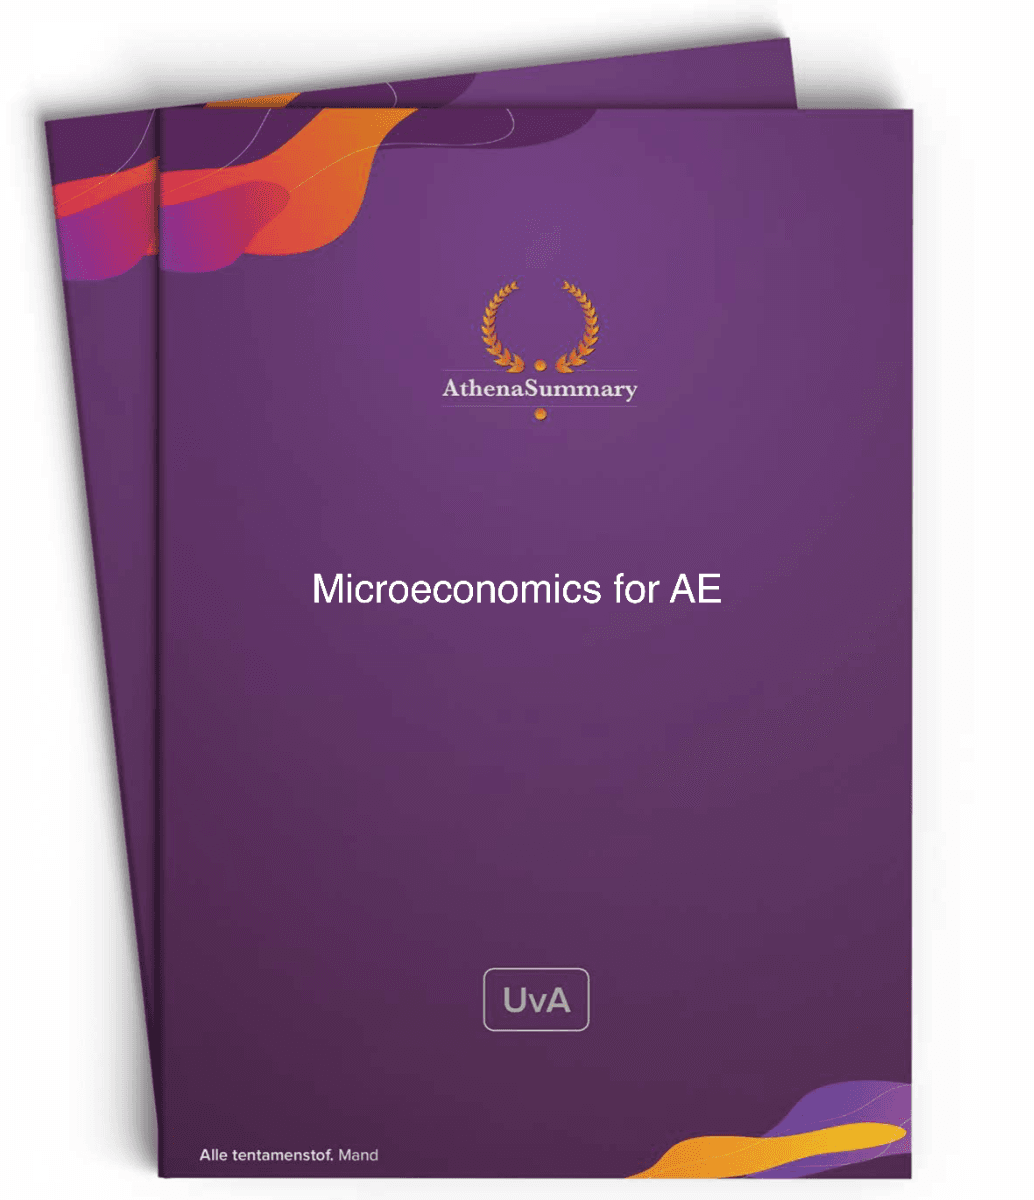 Literature Summary: Microeconomics for AE